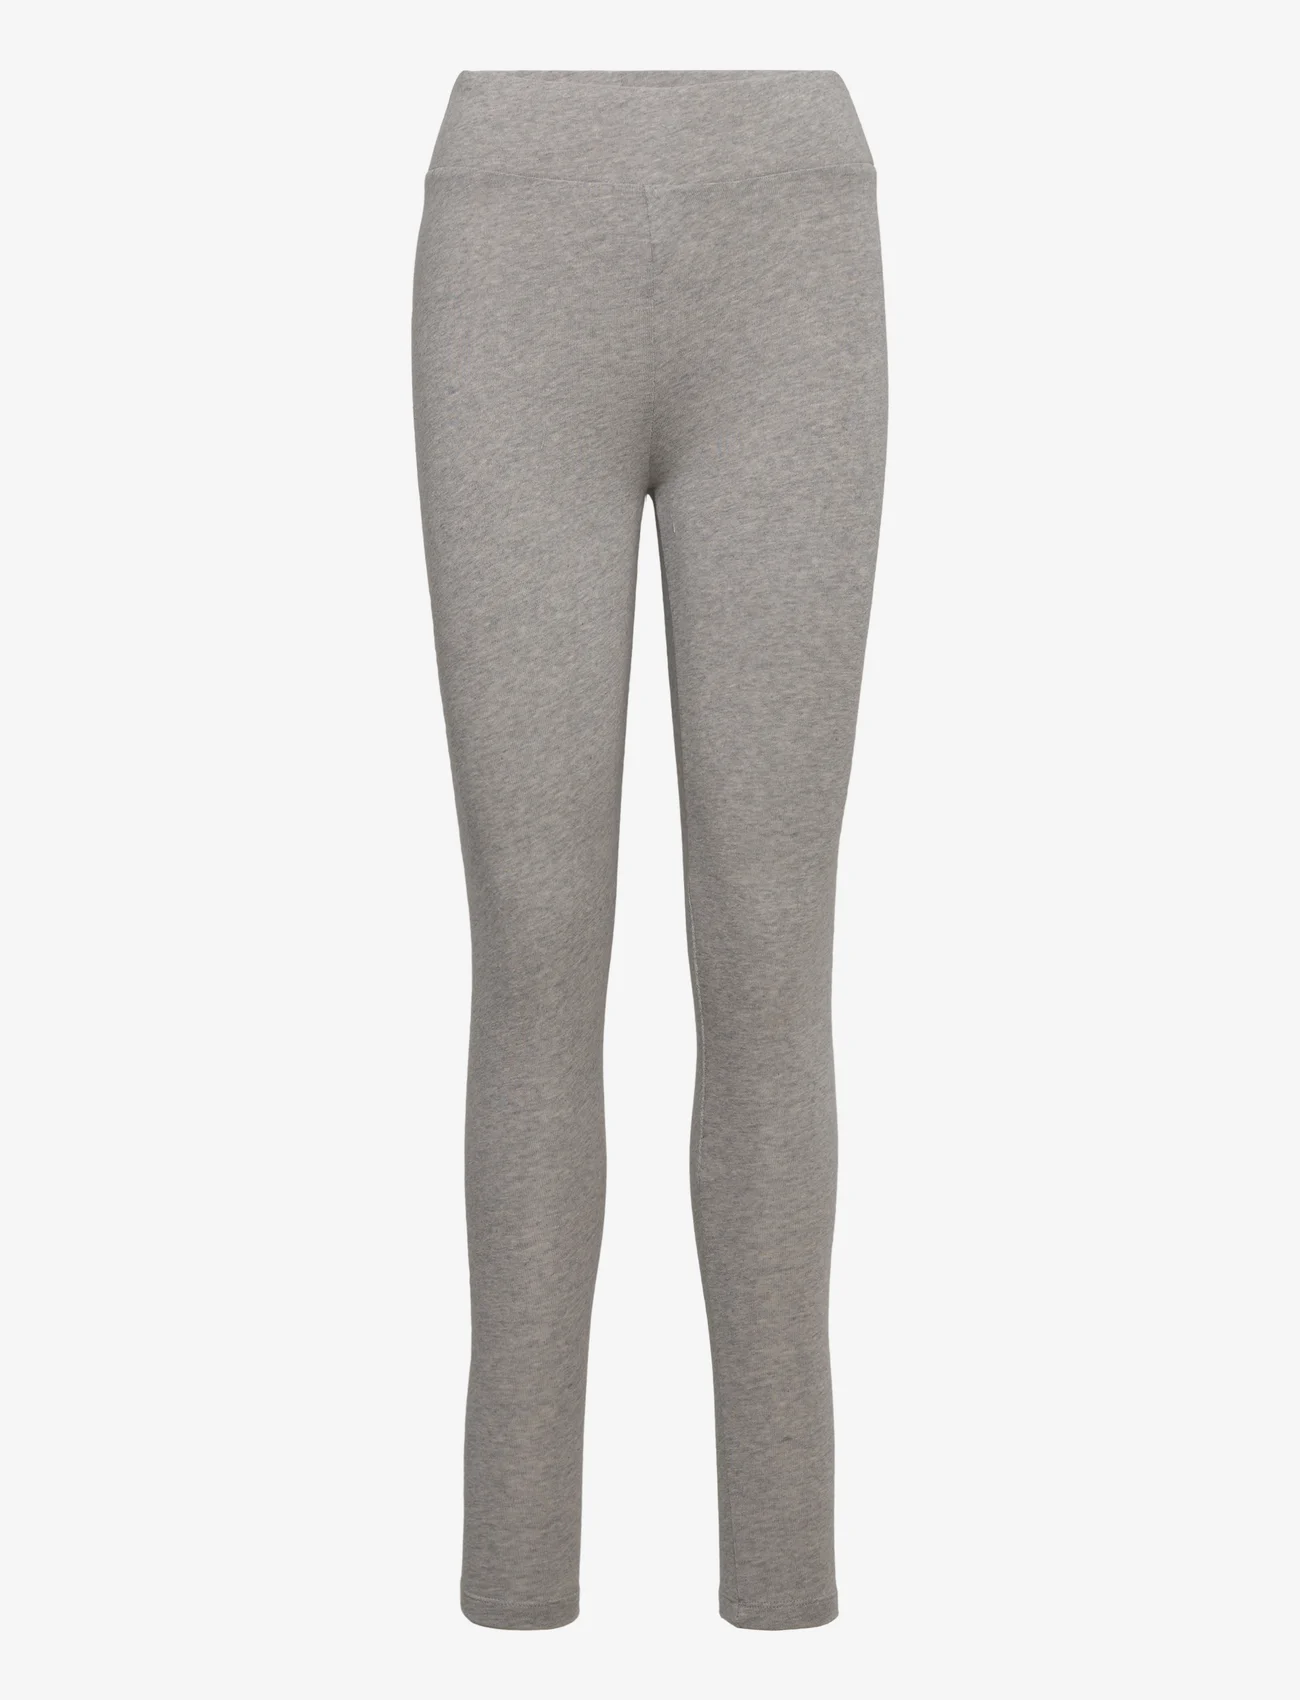 Basic Apparel - Anni soft leggings GOTS - timpės - grey mel. - 0